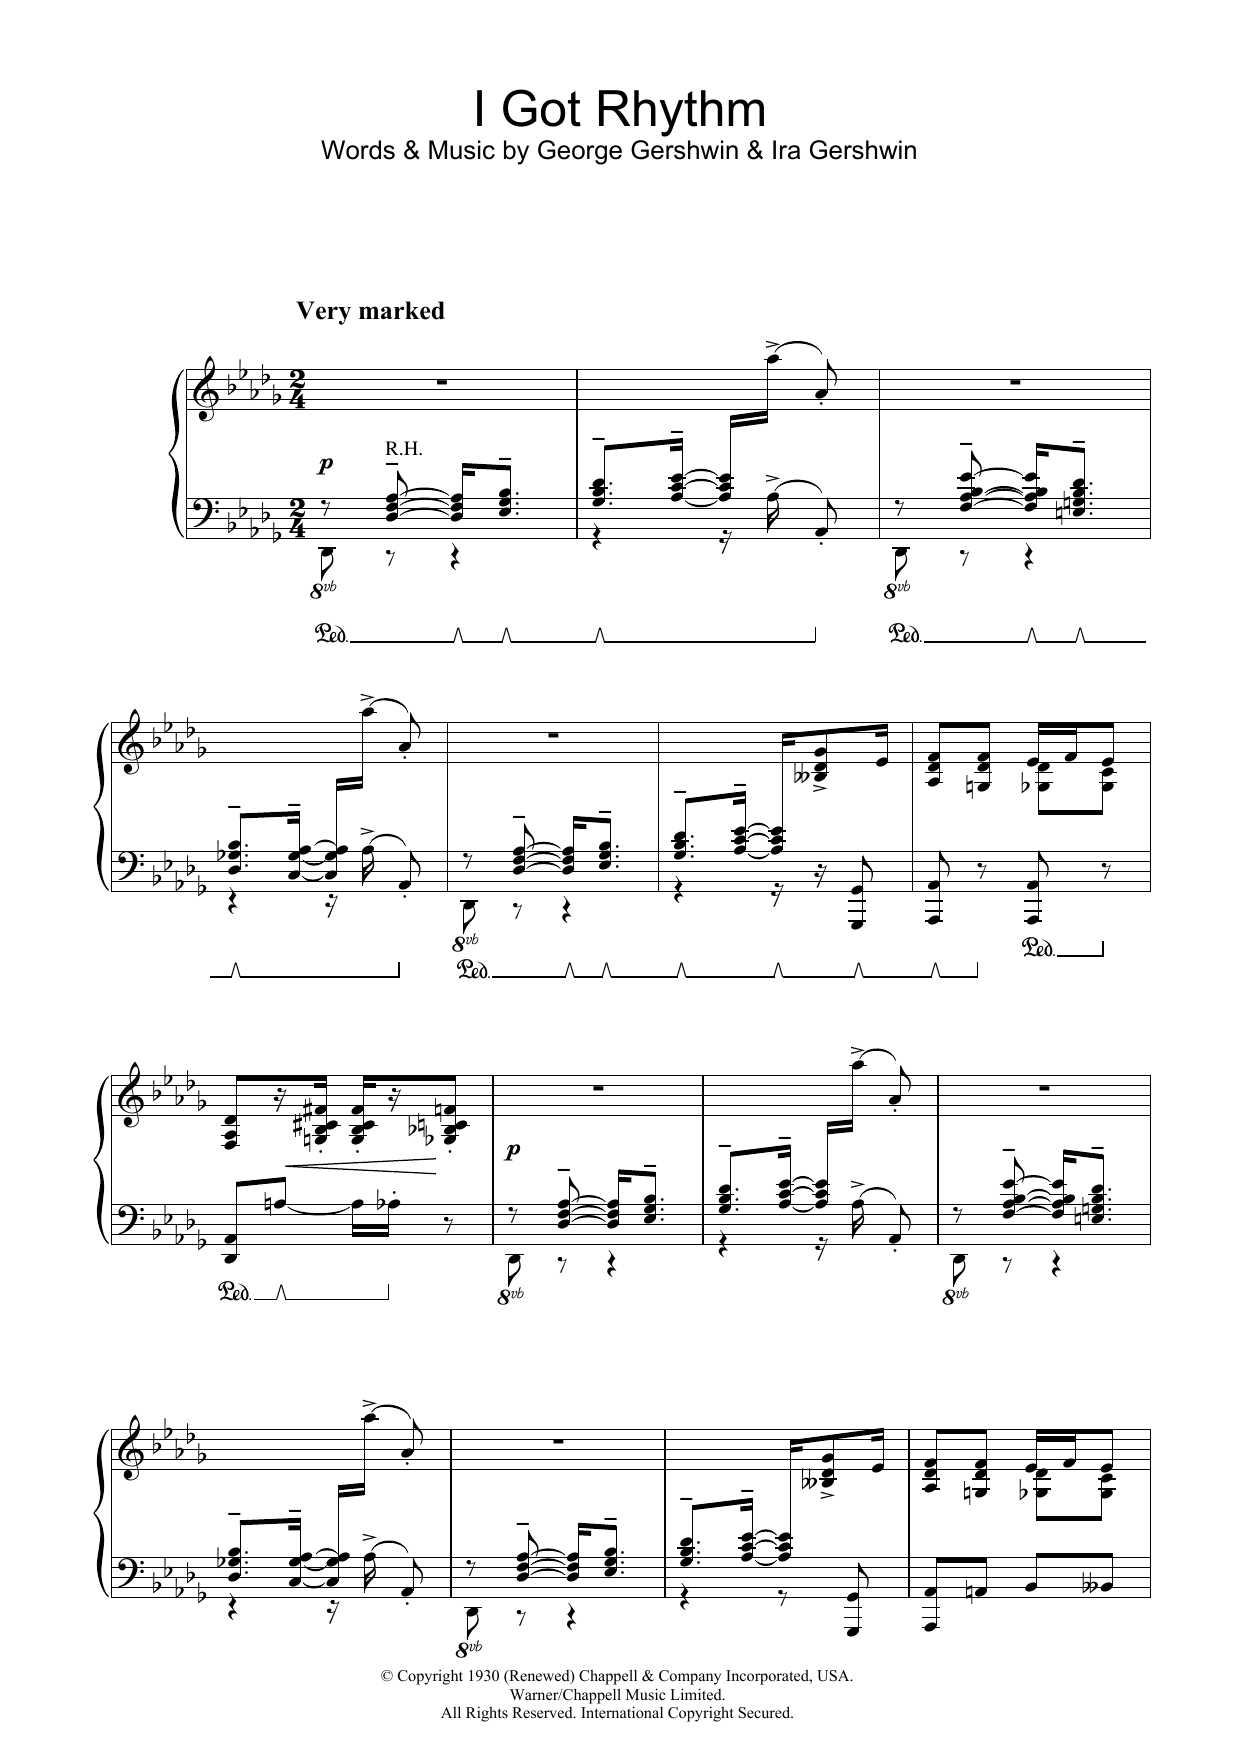 George Gershwin I Got Rhythm Sheet Music Notes & Chords for Real Book – Melody, Lyrics & Chords - Download or Print PDF